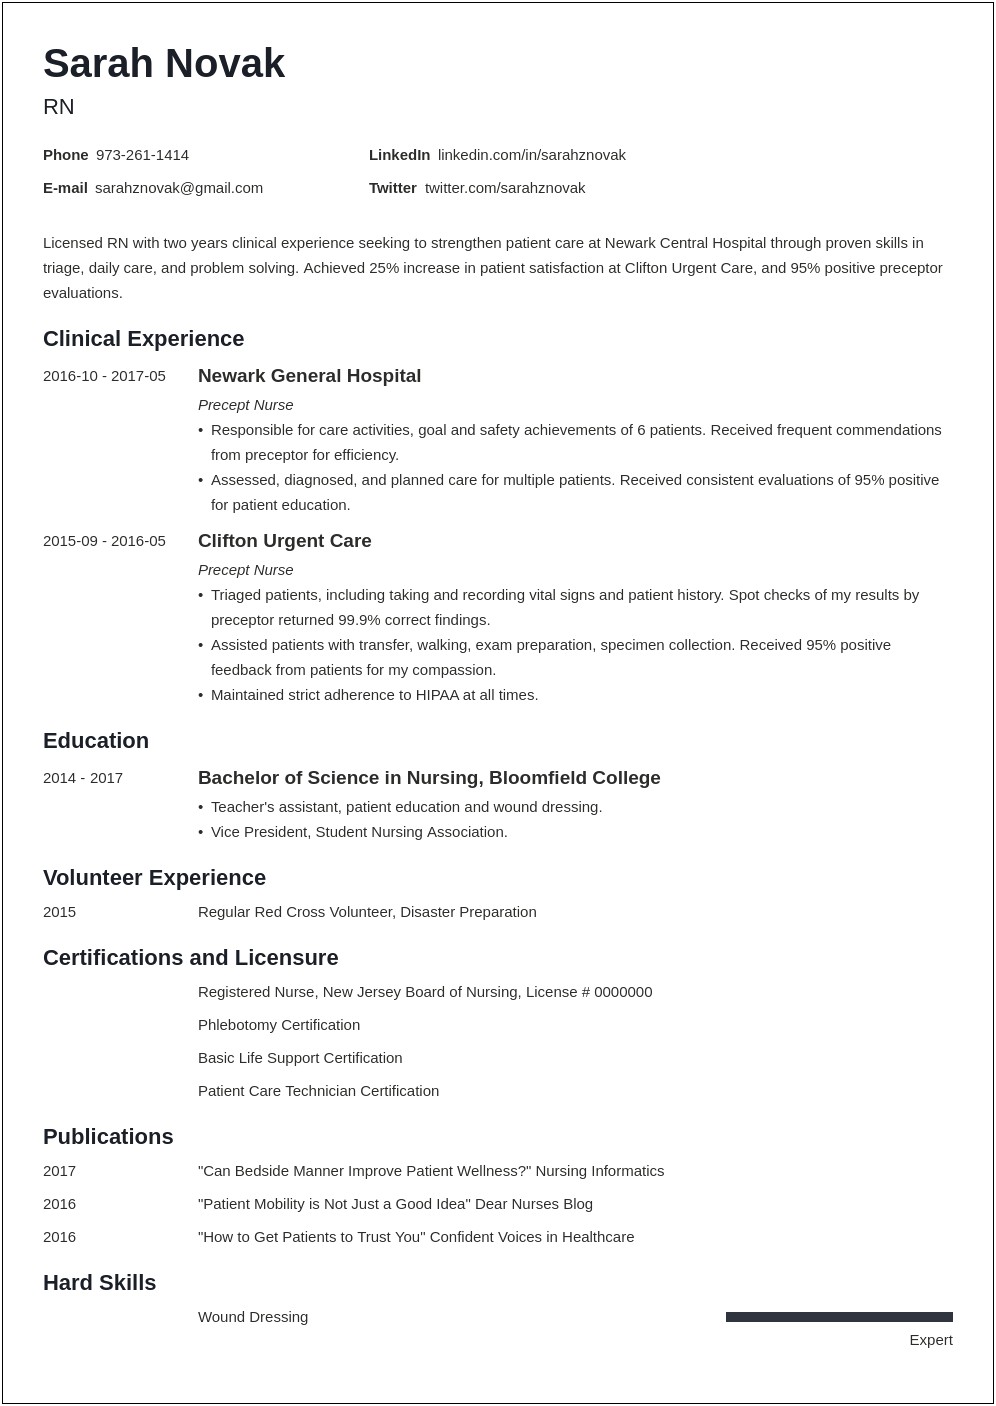 Sample Resume For Nursing Assistant Student